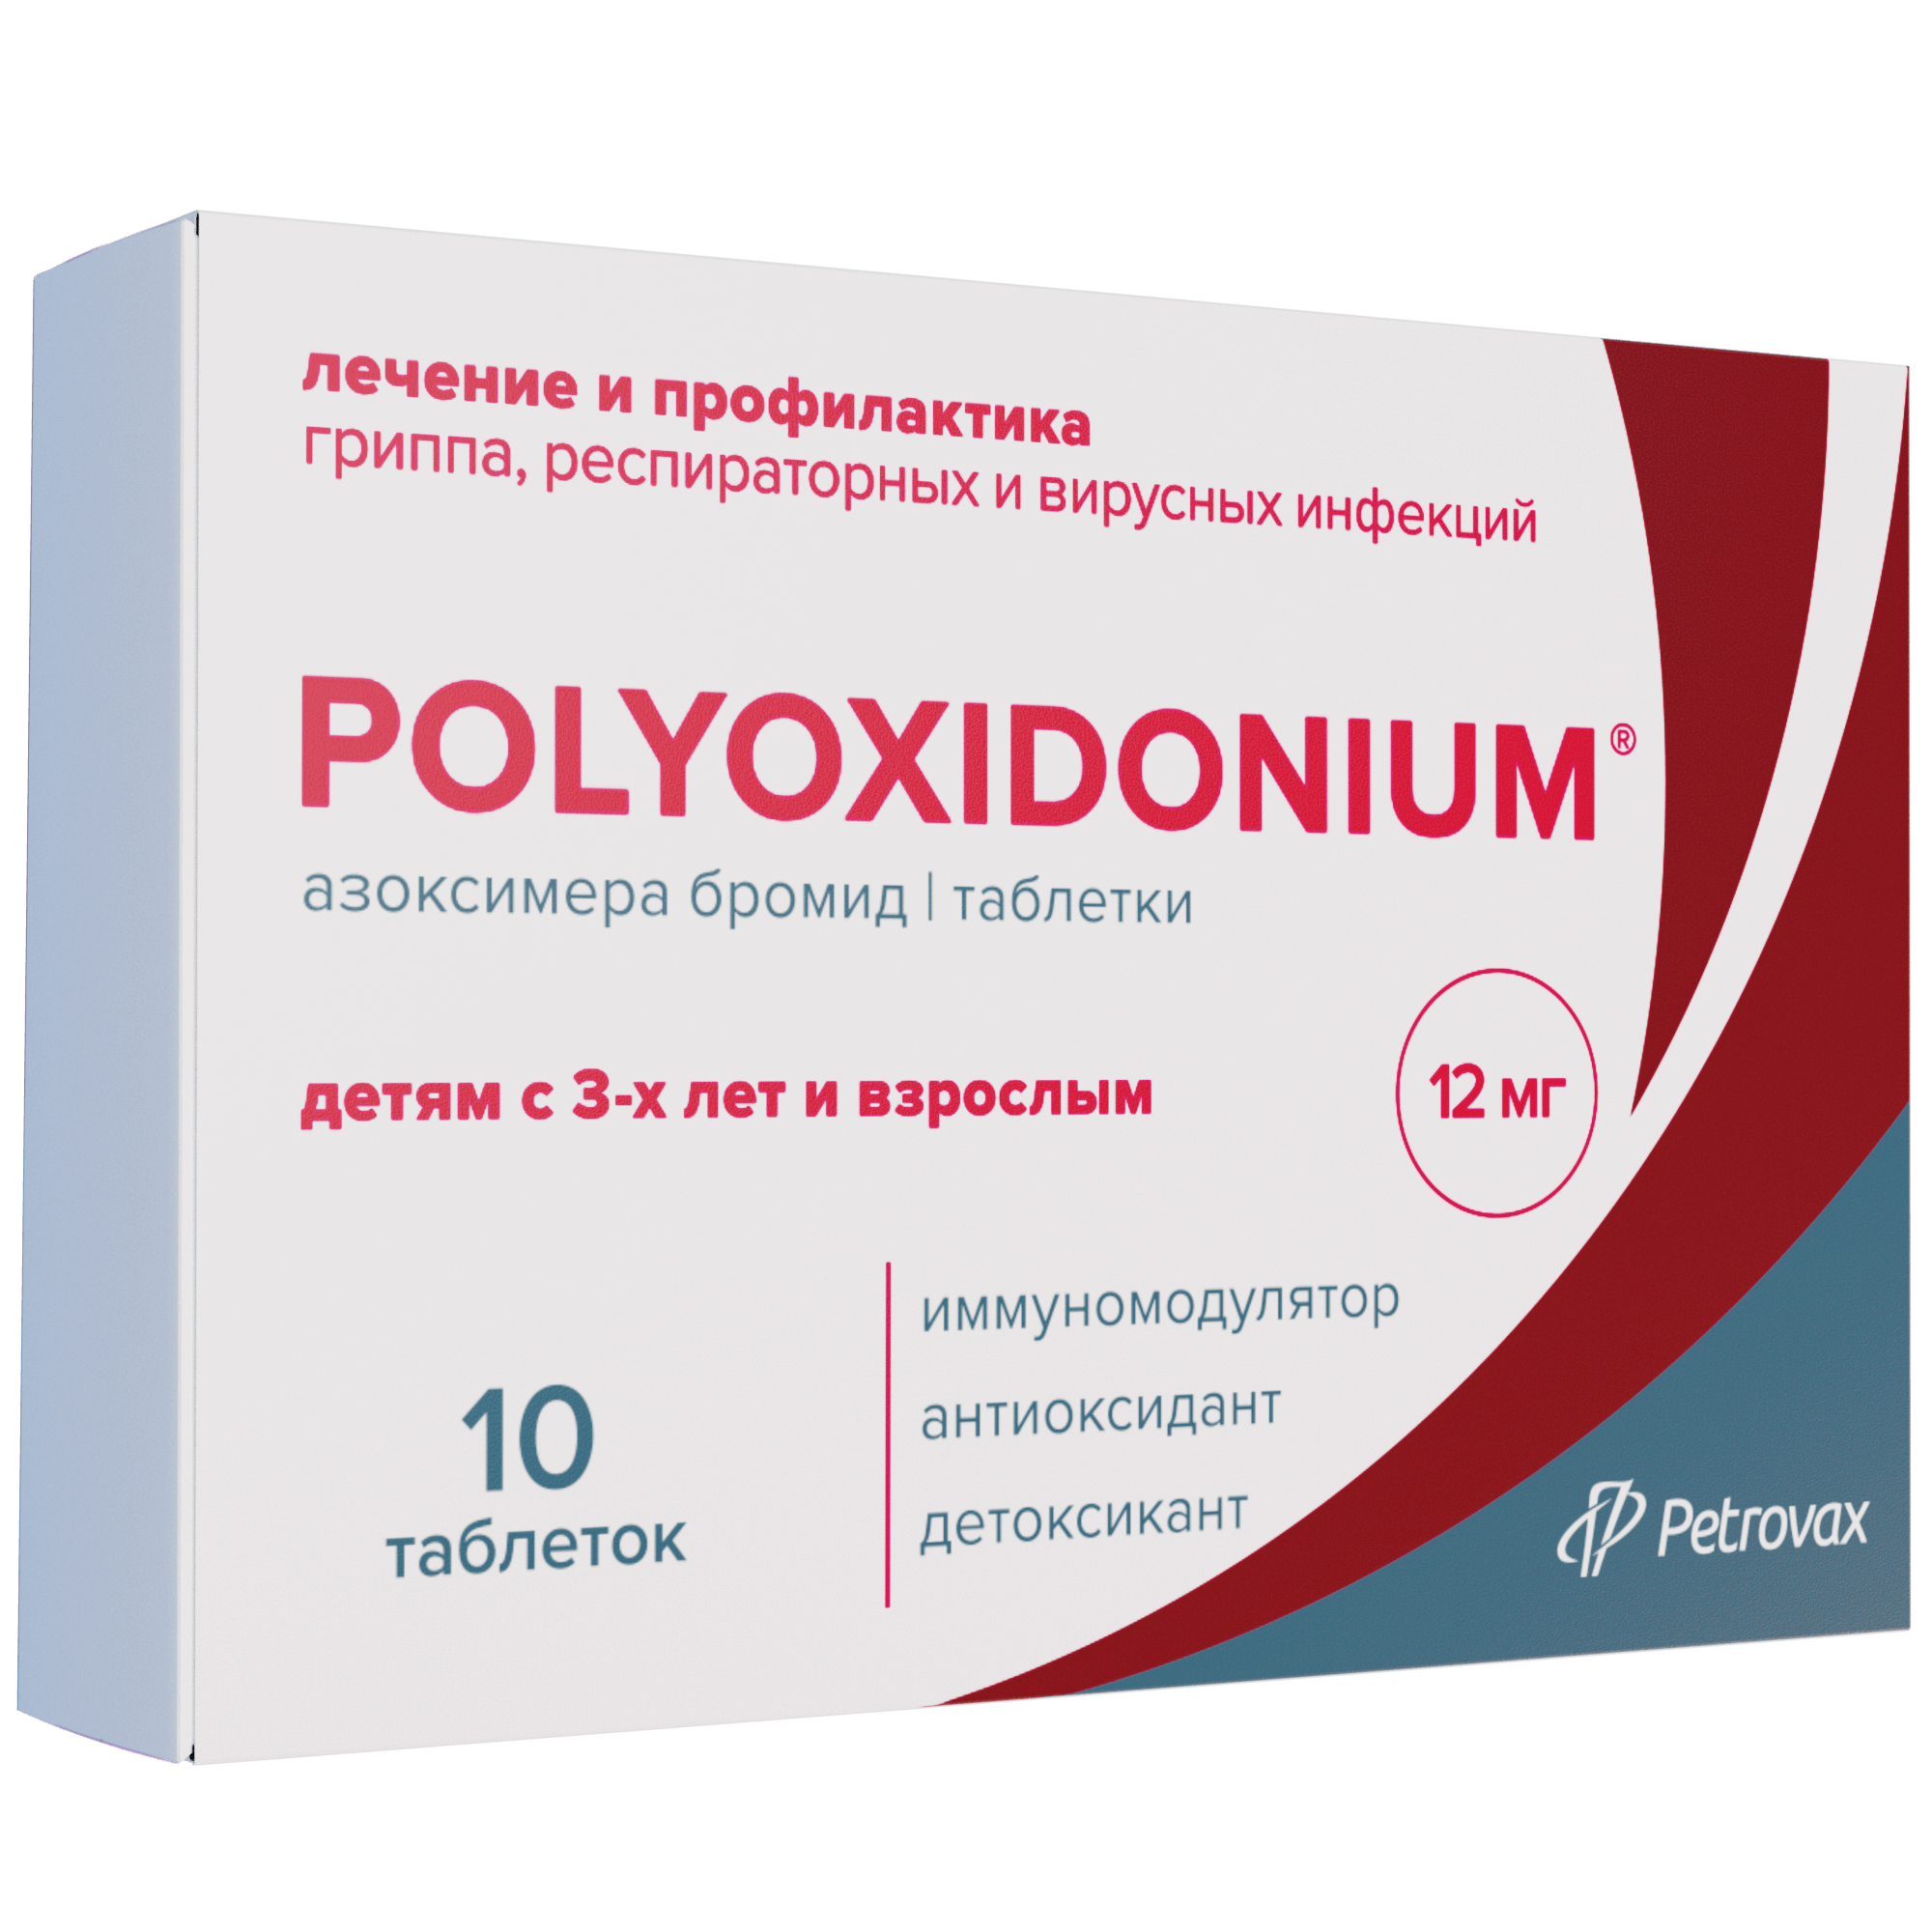 Polyoxidonium pack